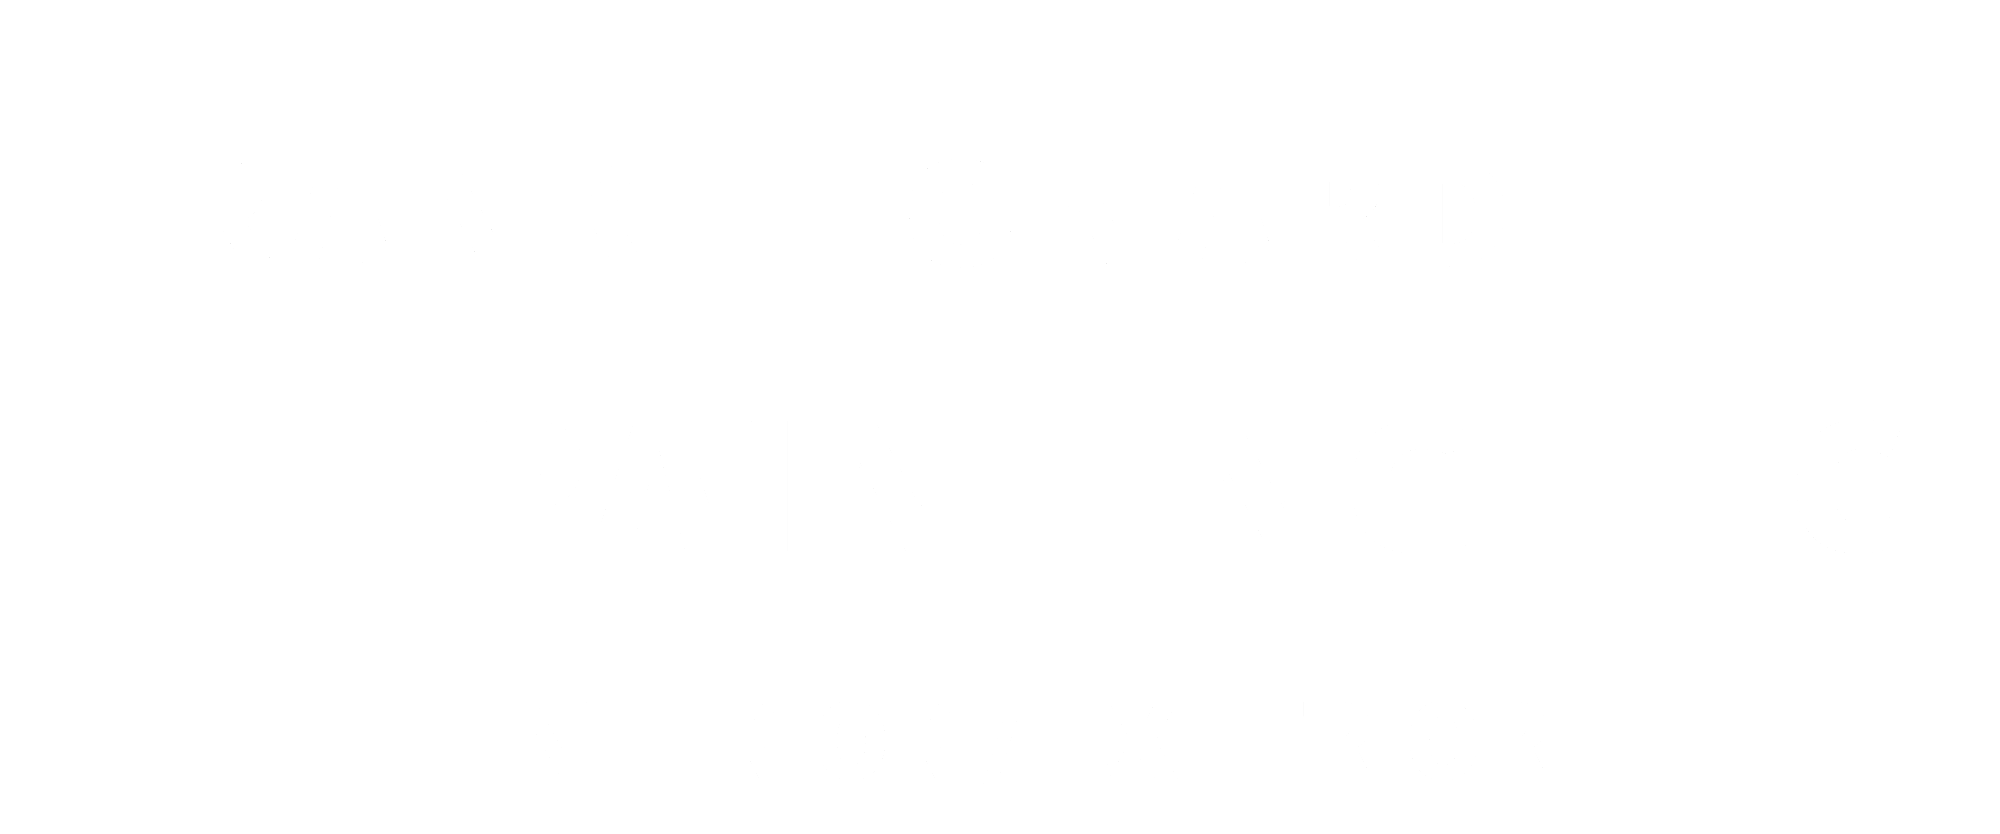 Frank Leonard Painting